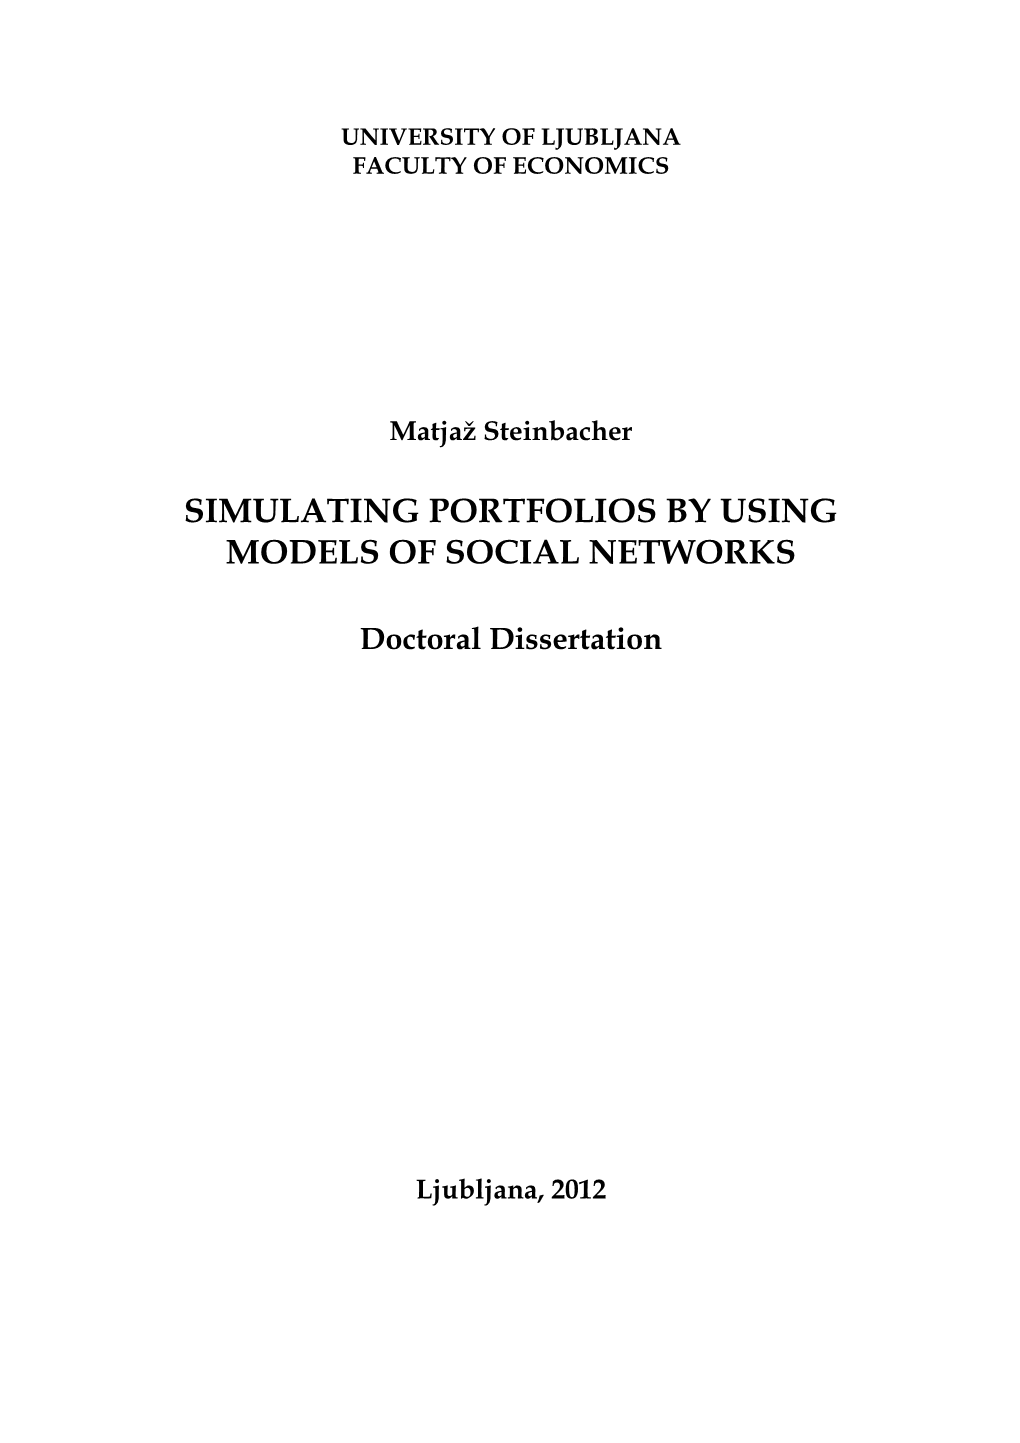 Simulating Portfolios by Using Models of Social Networks